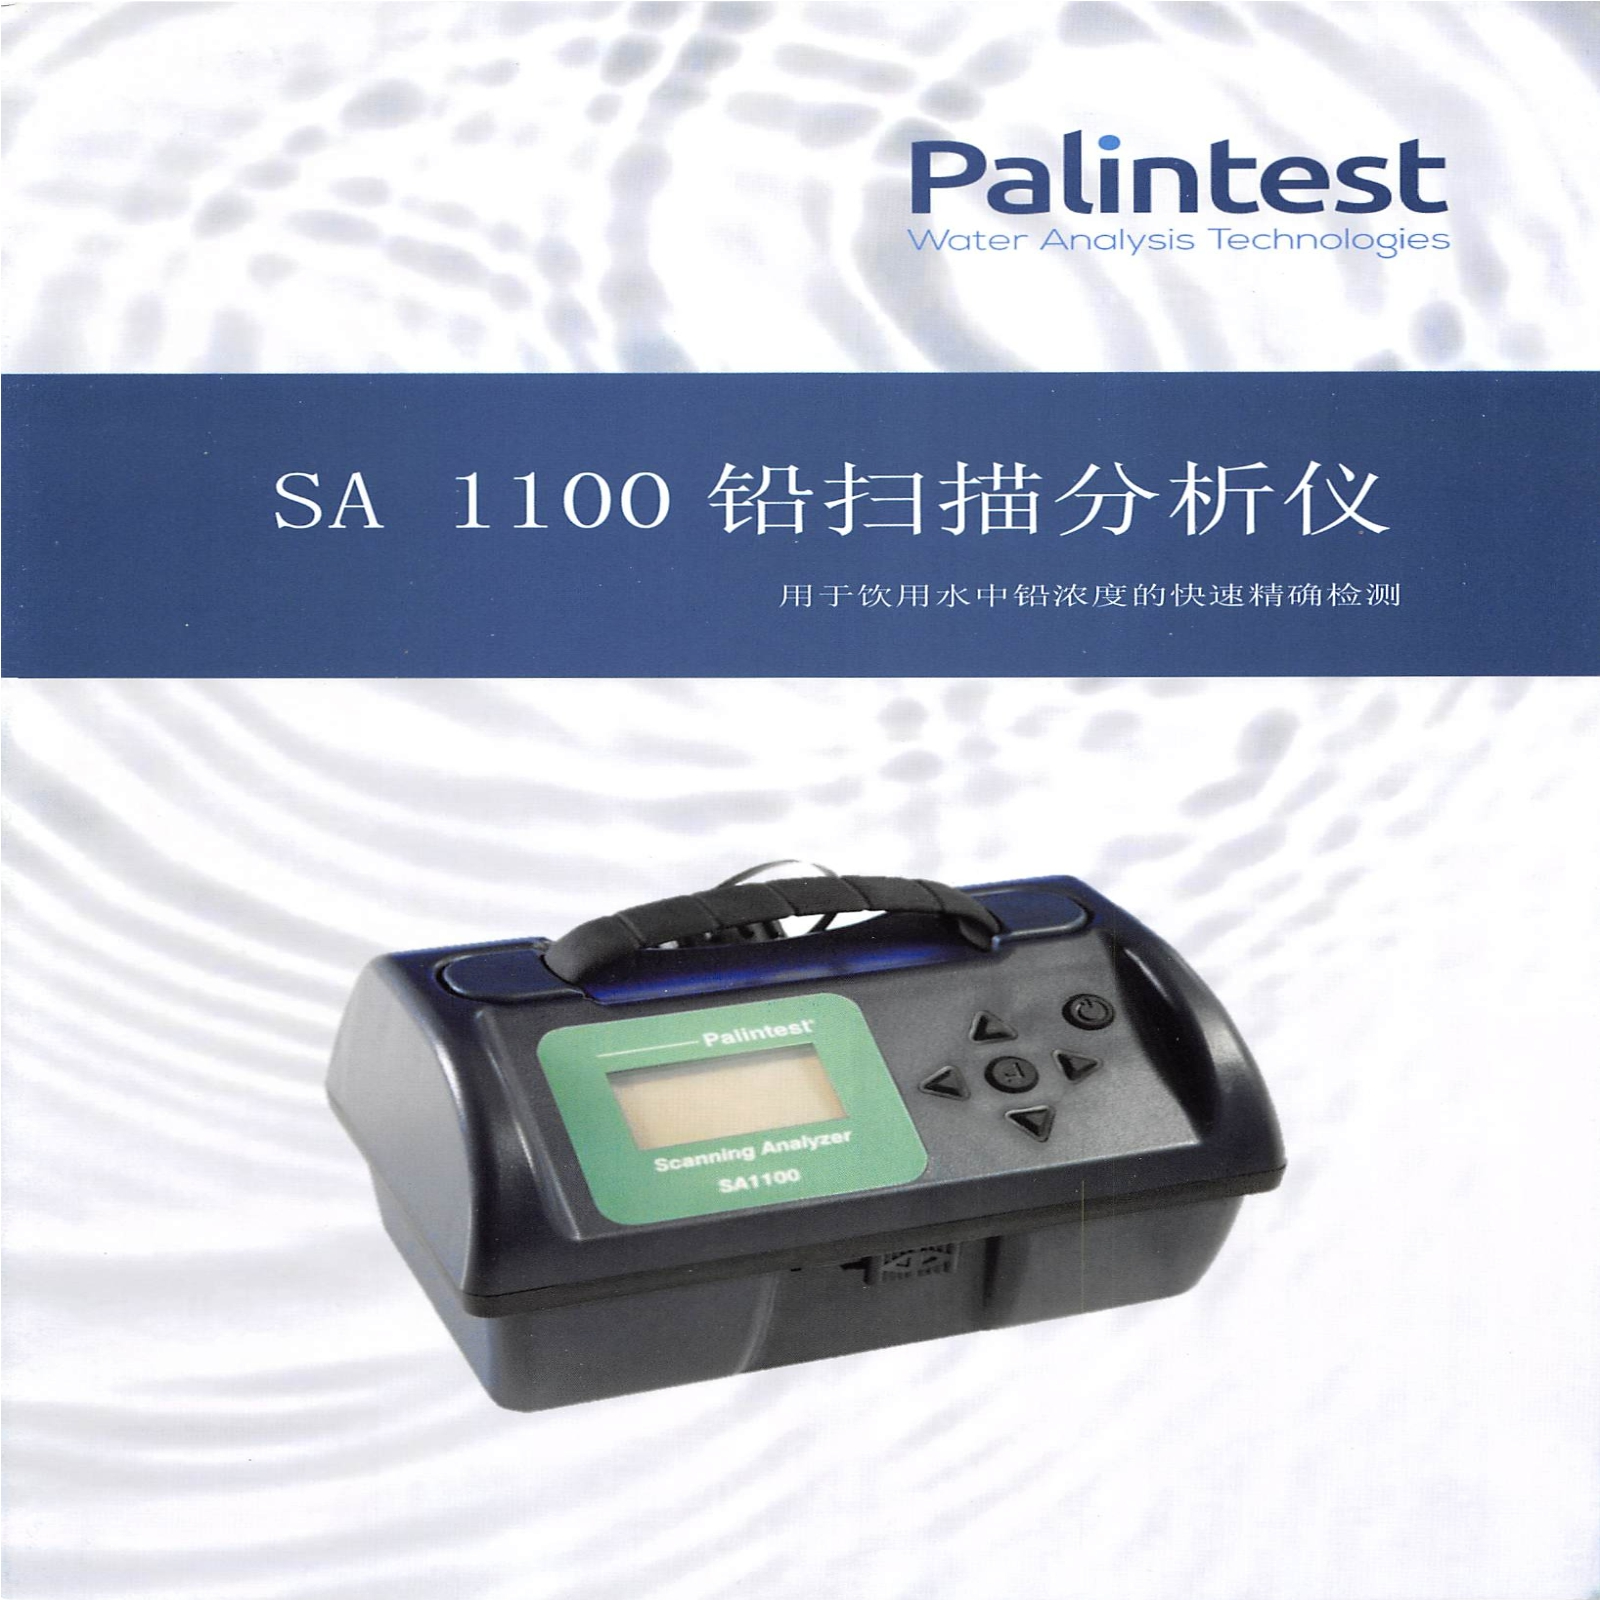 SA 1100铅扫描分析仪